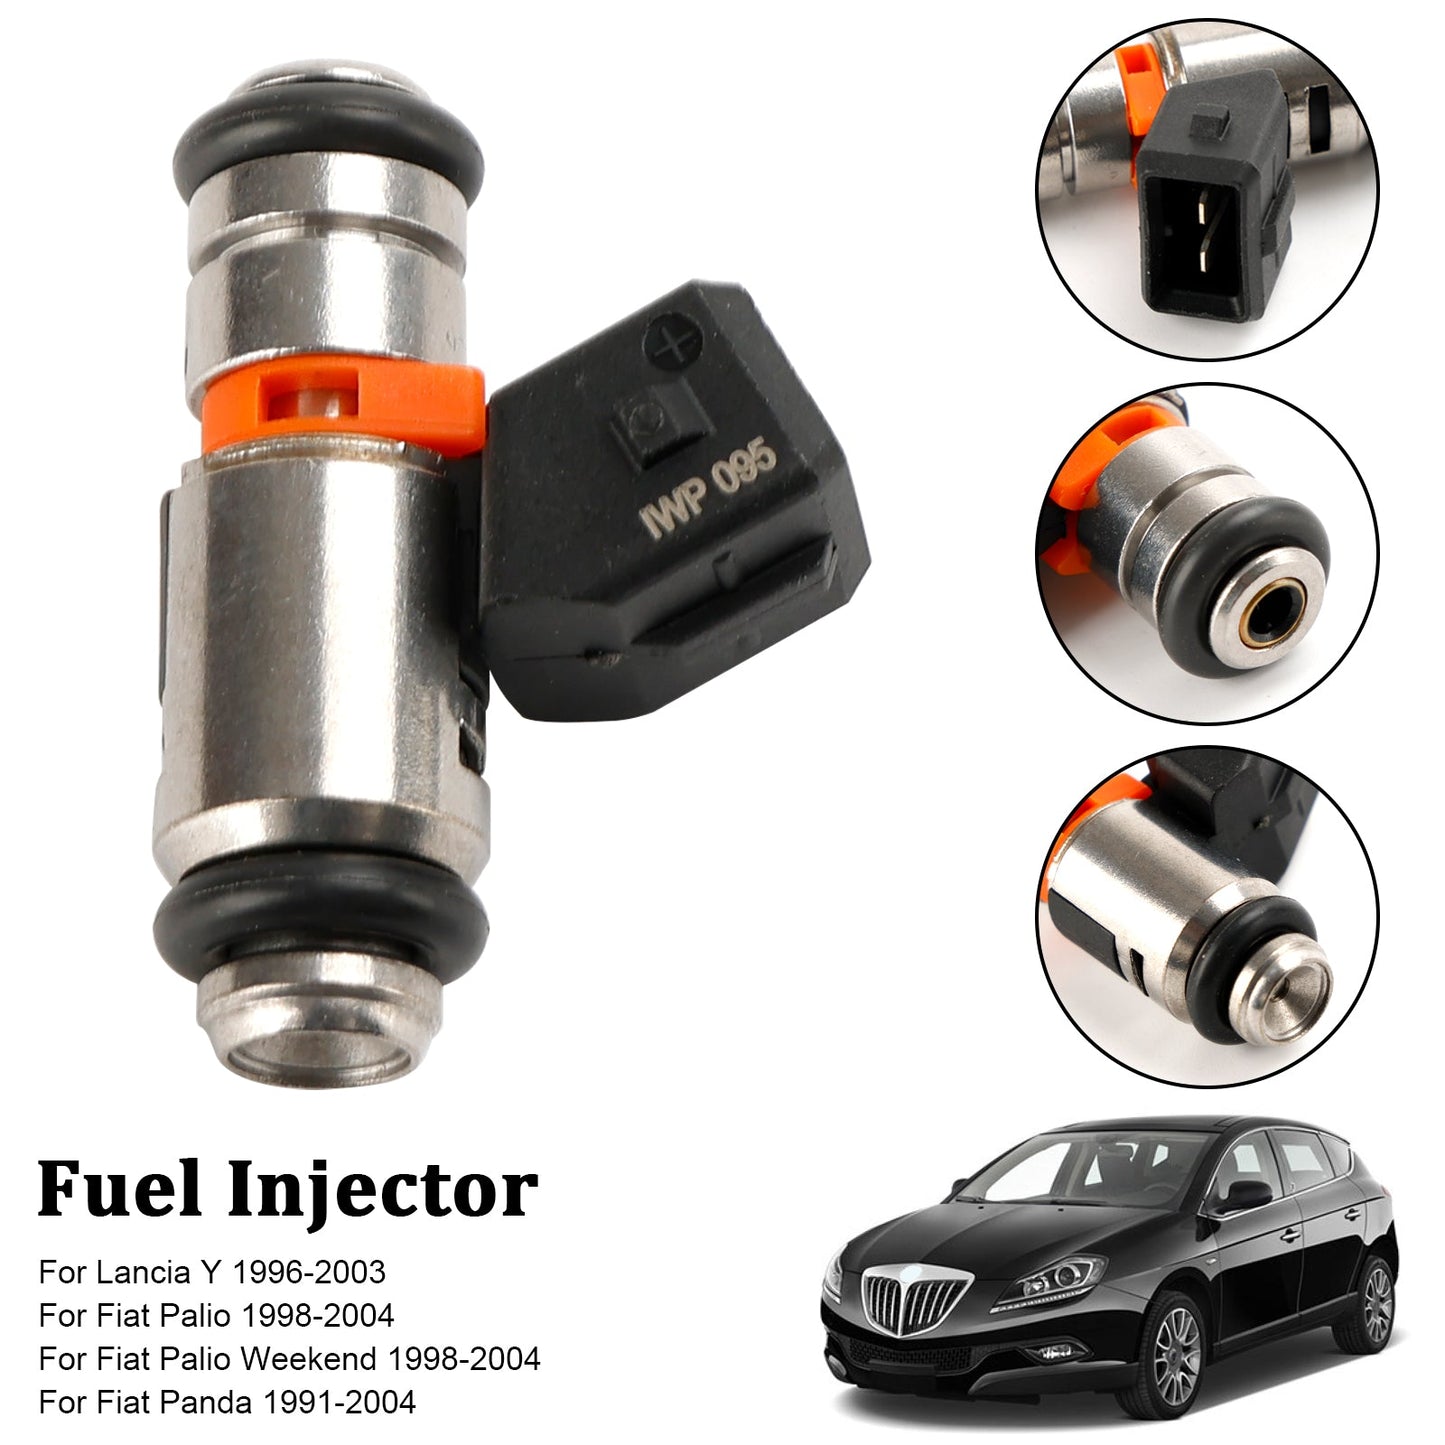 1PCS Fuel Injector IWP095 Fit Fiat Punto 1.4L 2007-2009 Fit Fiat Palio 1.6L